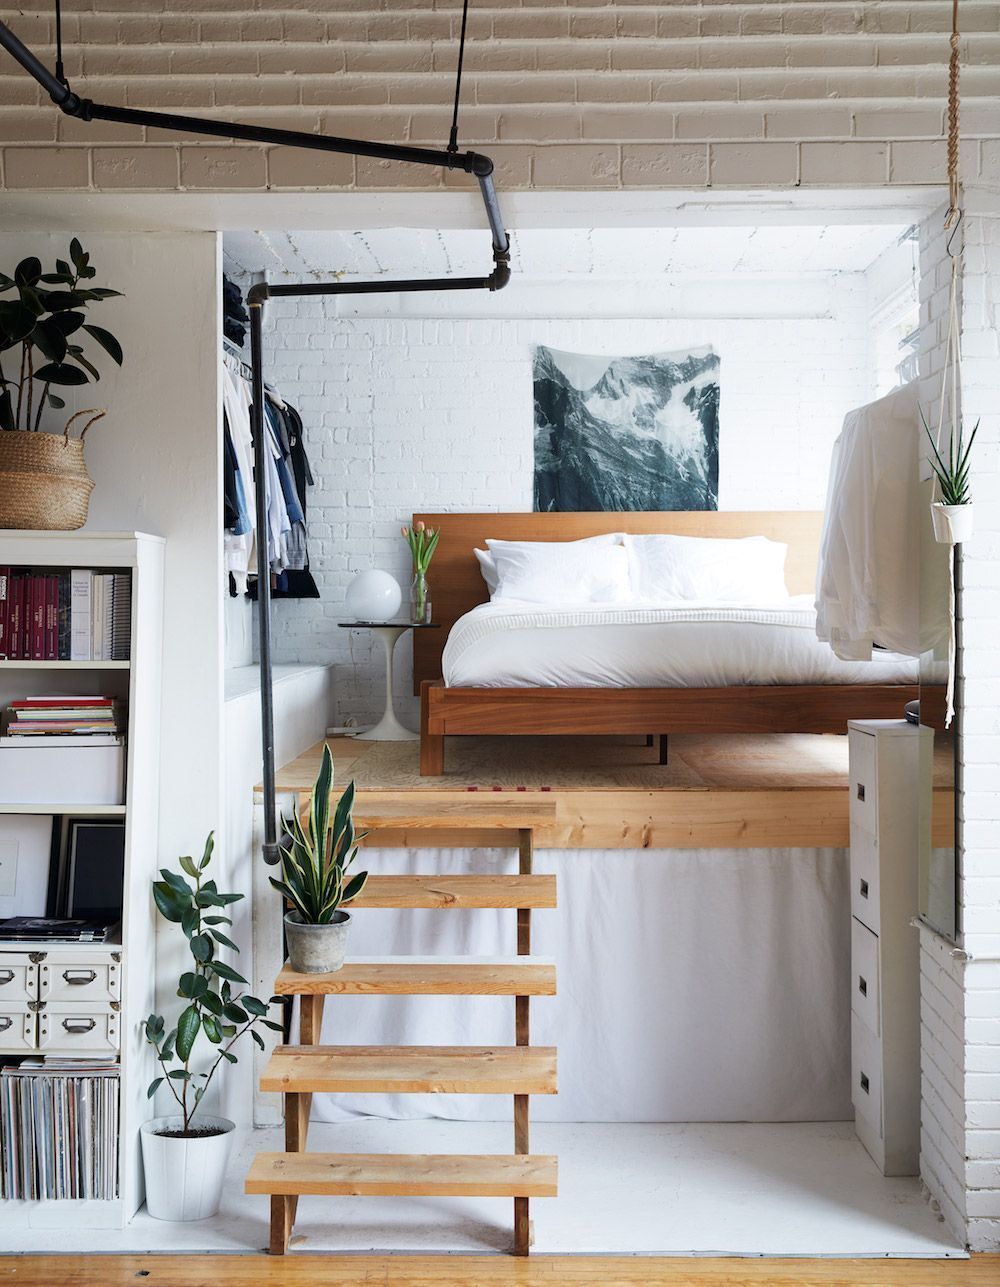 The Tresor Apartment -   11 room decor Cama diy ideas